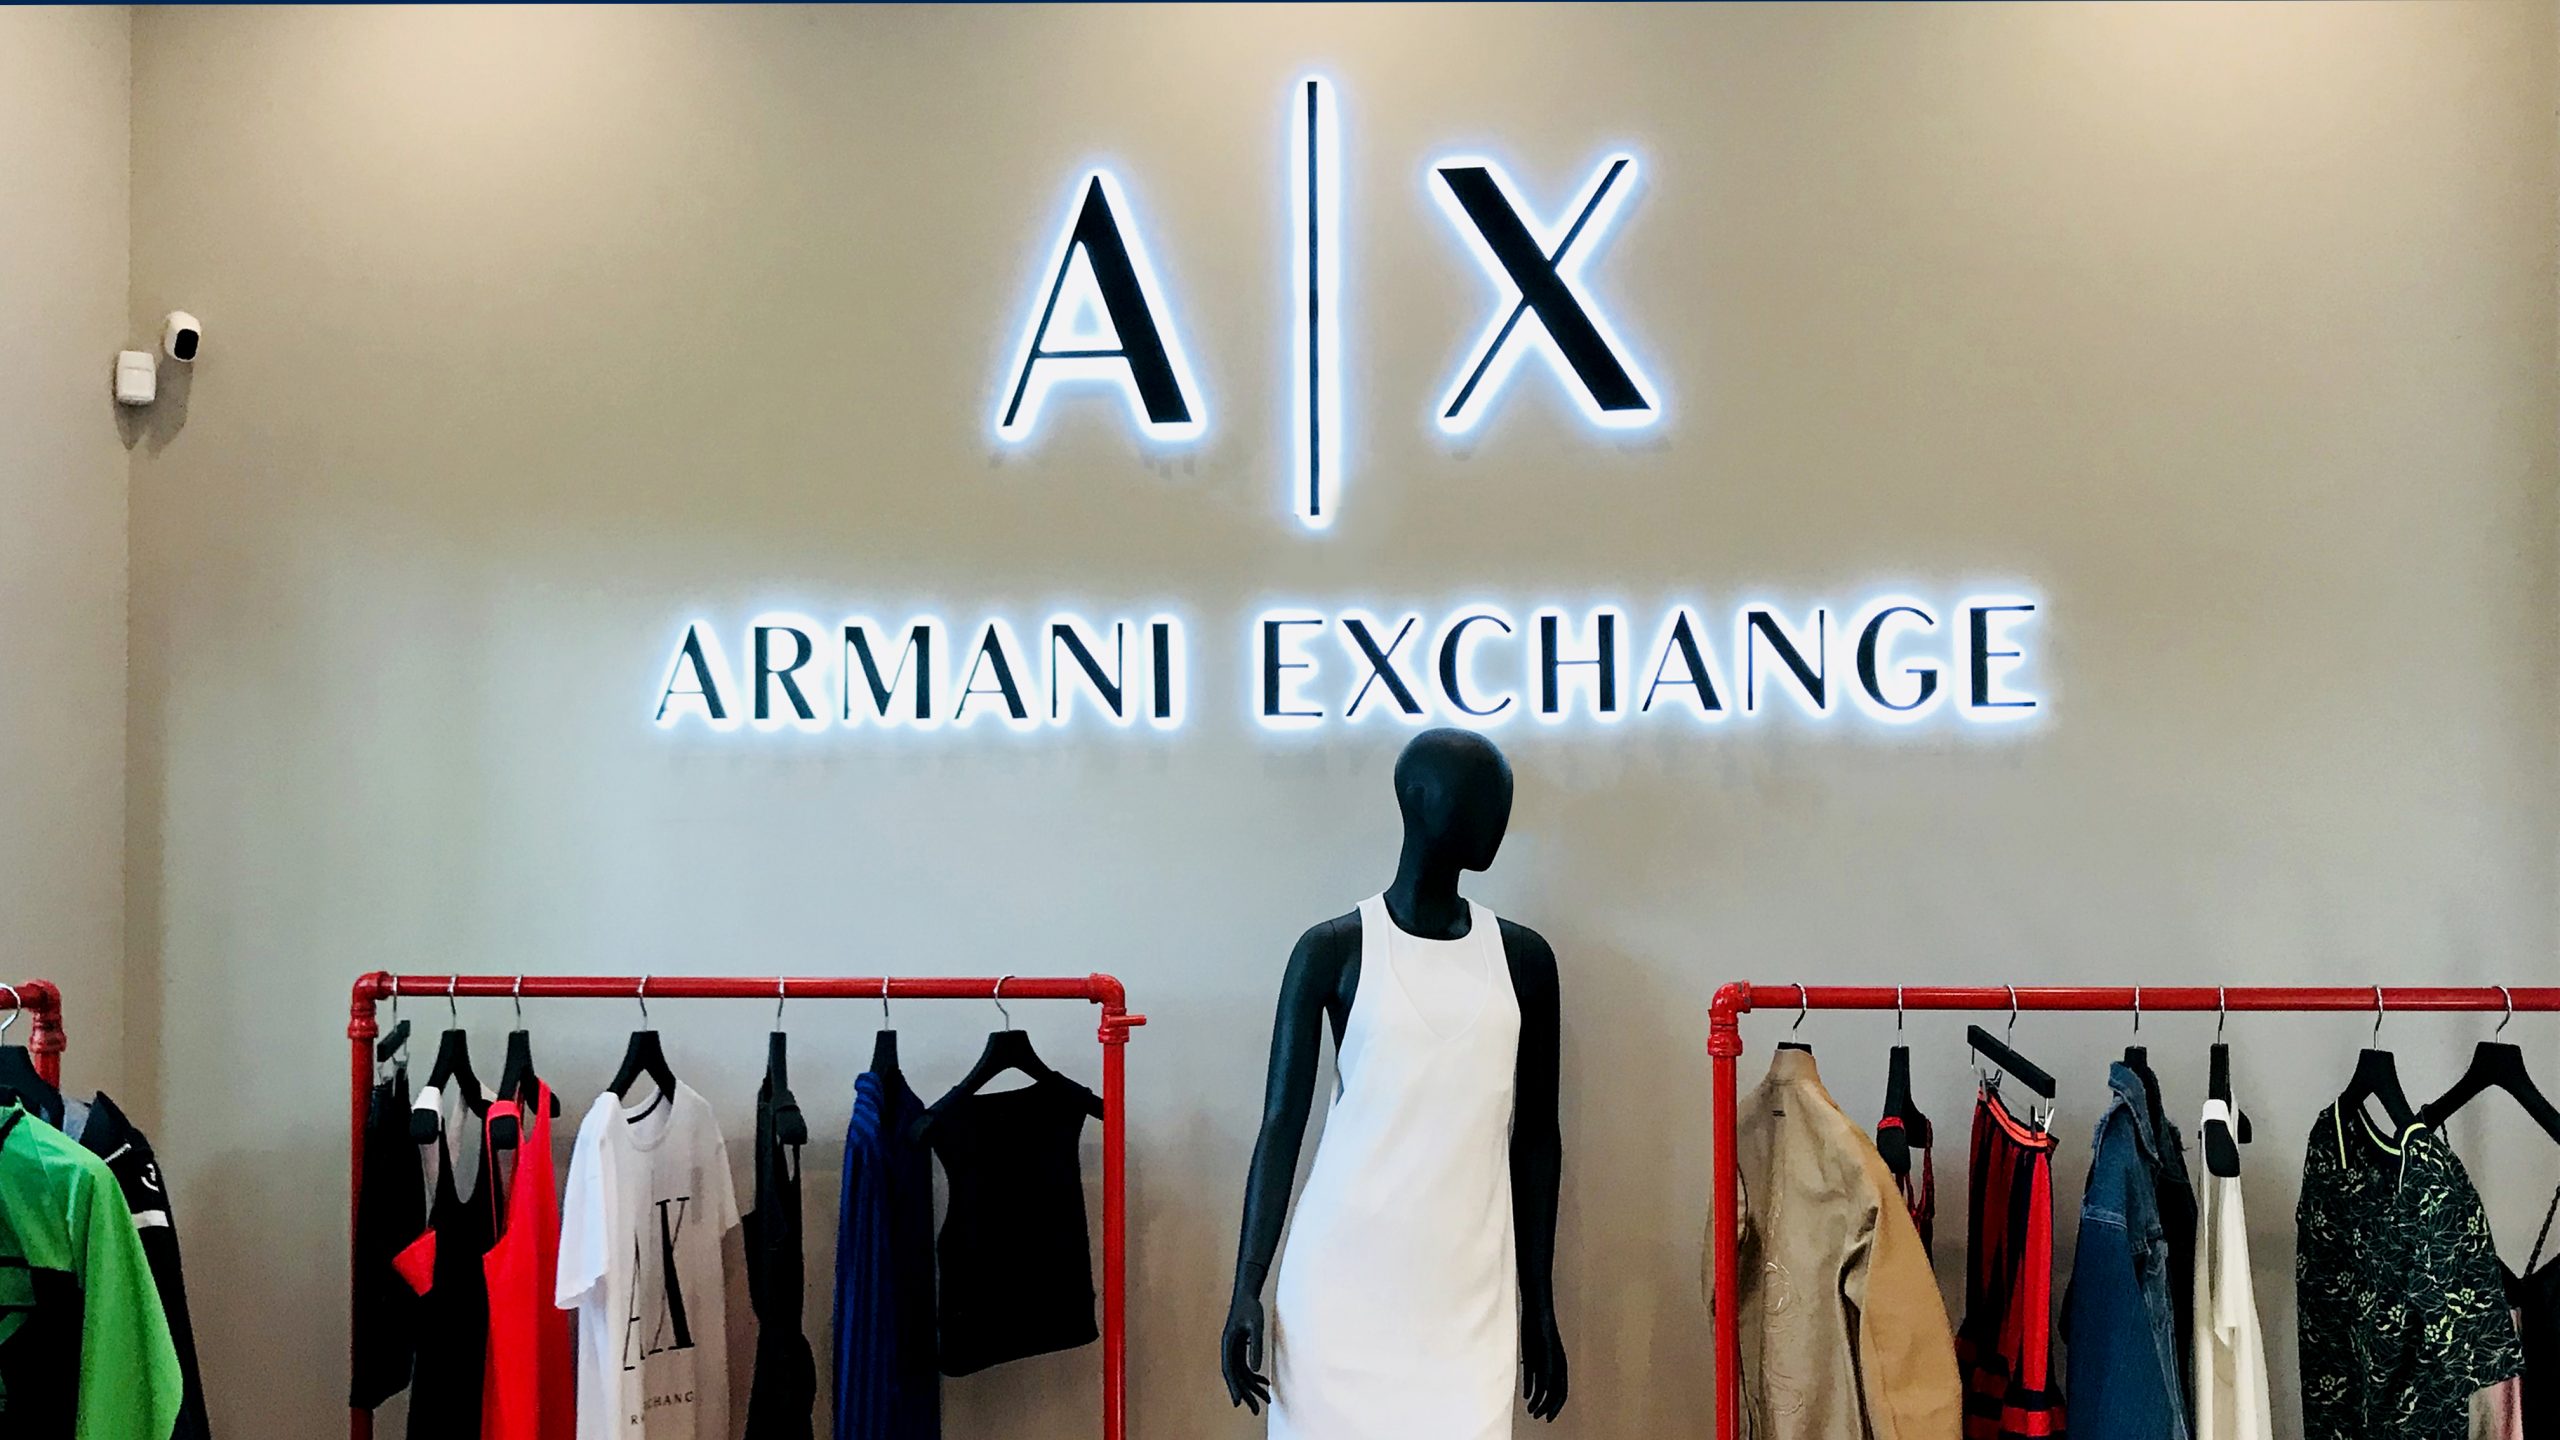 Armani exchange backlit letters